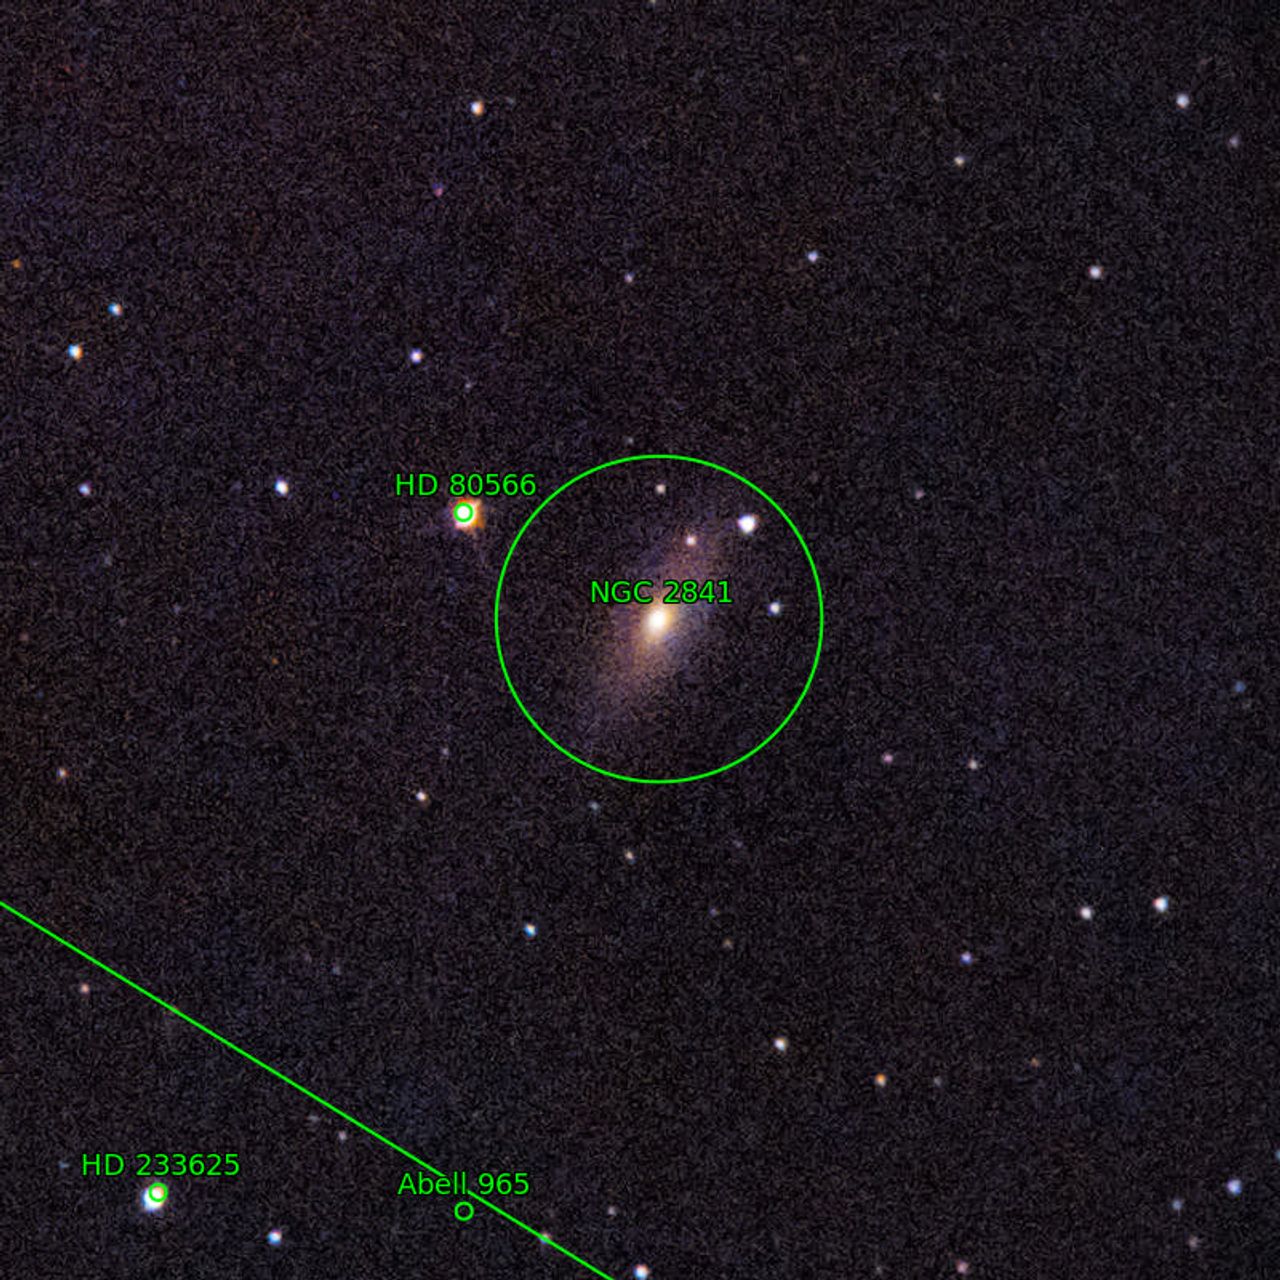 Annotation around NGC2841